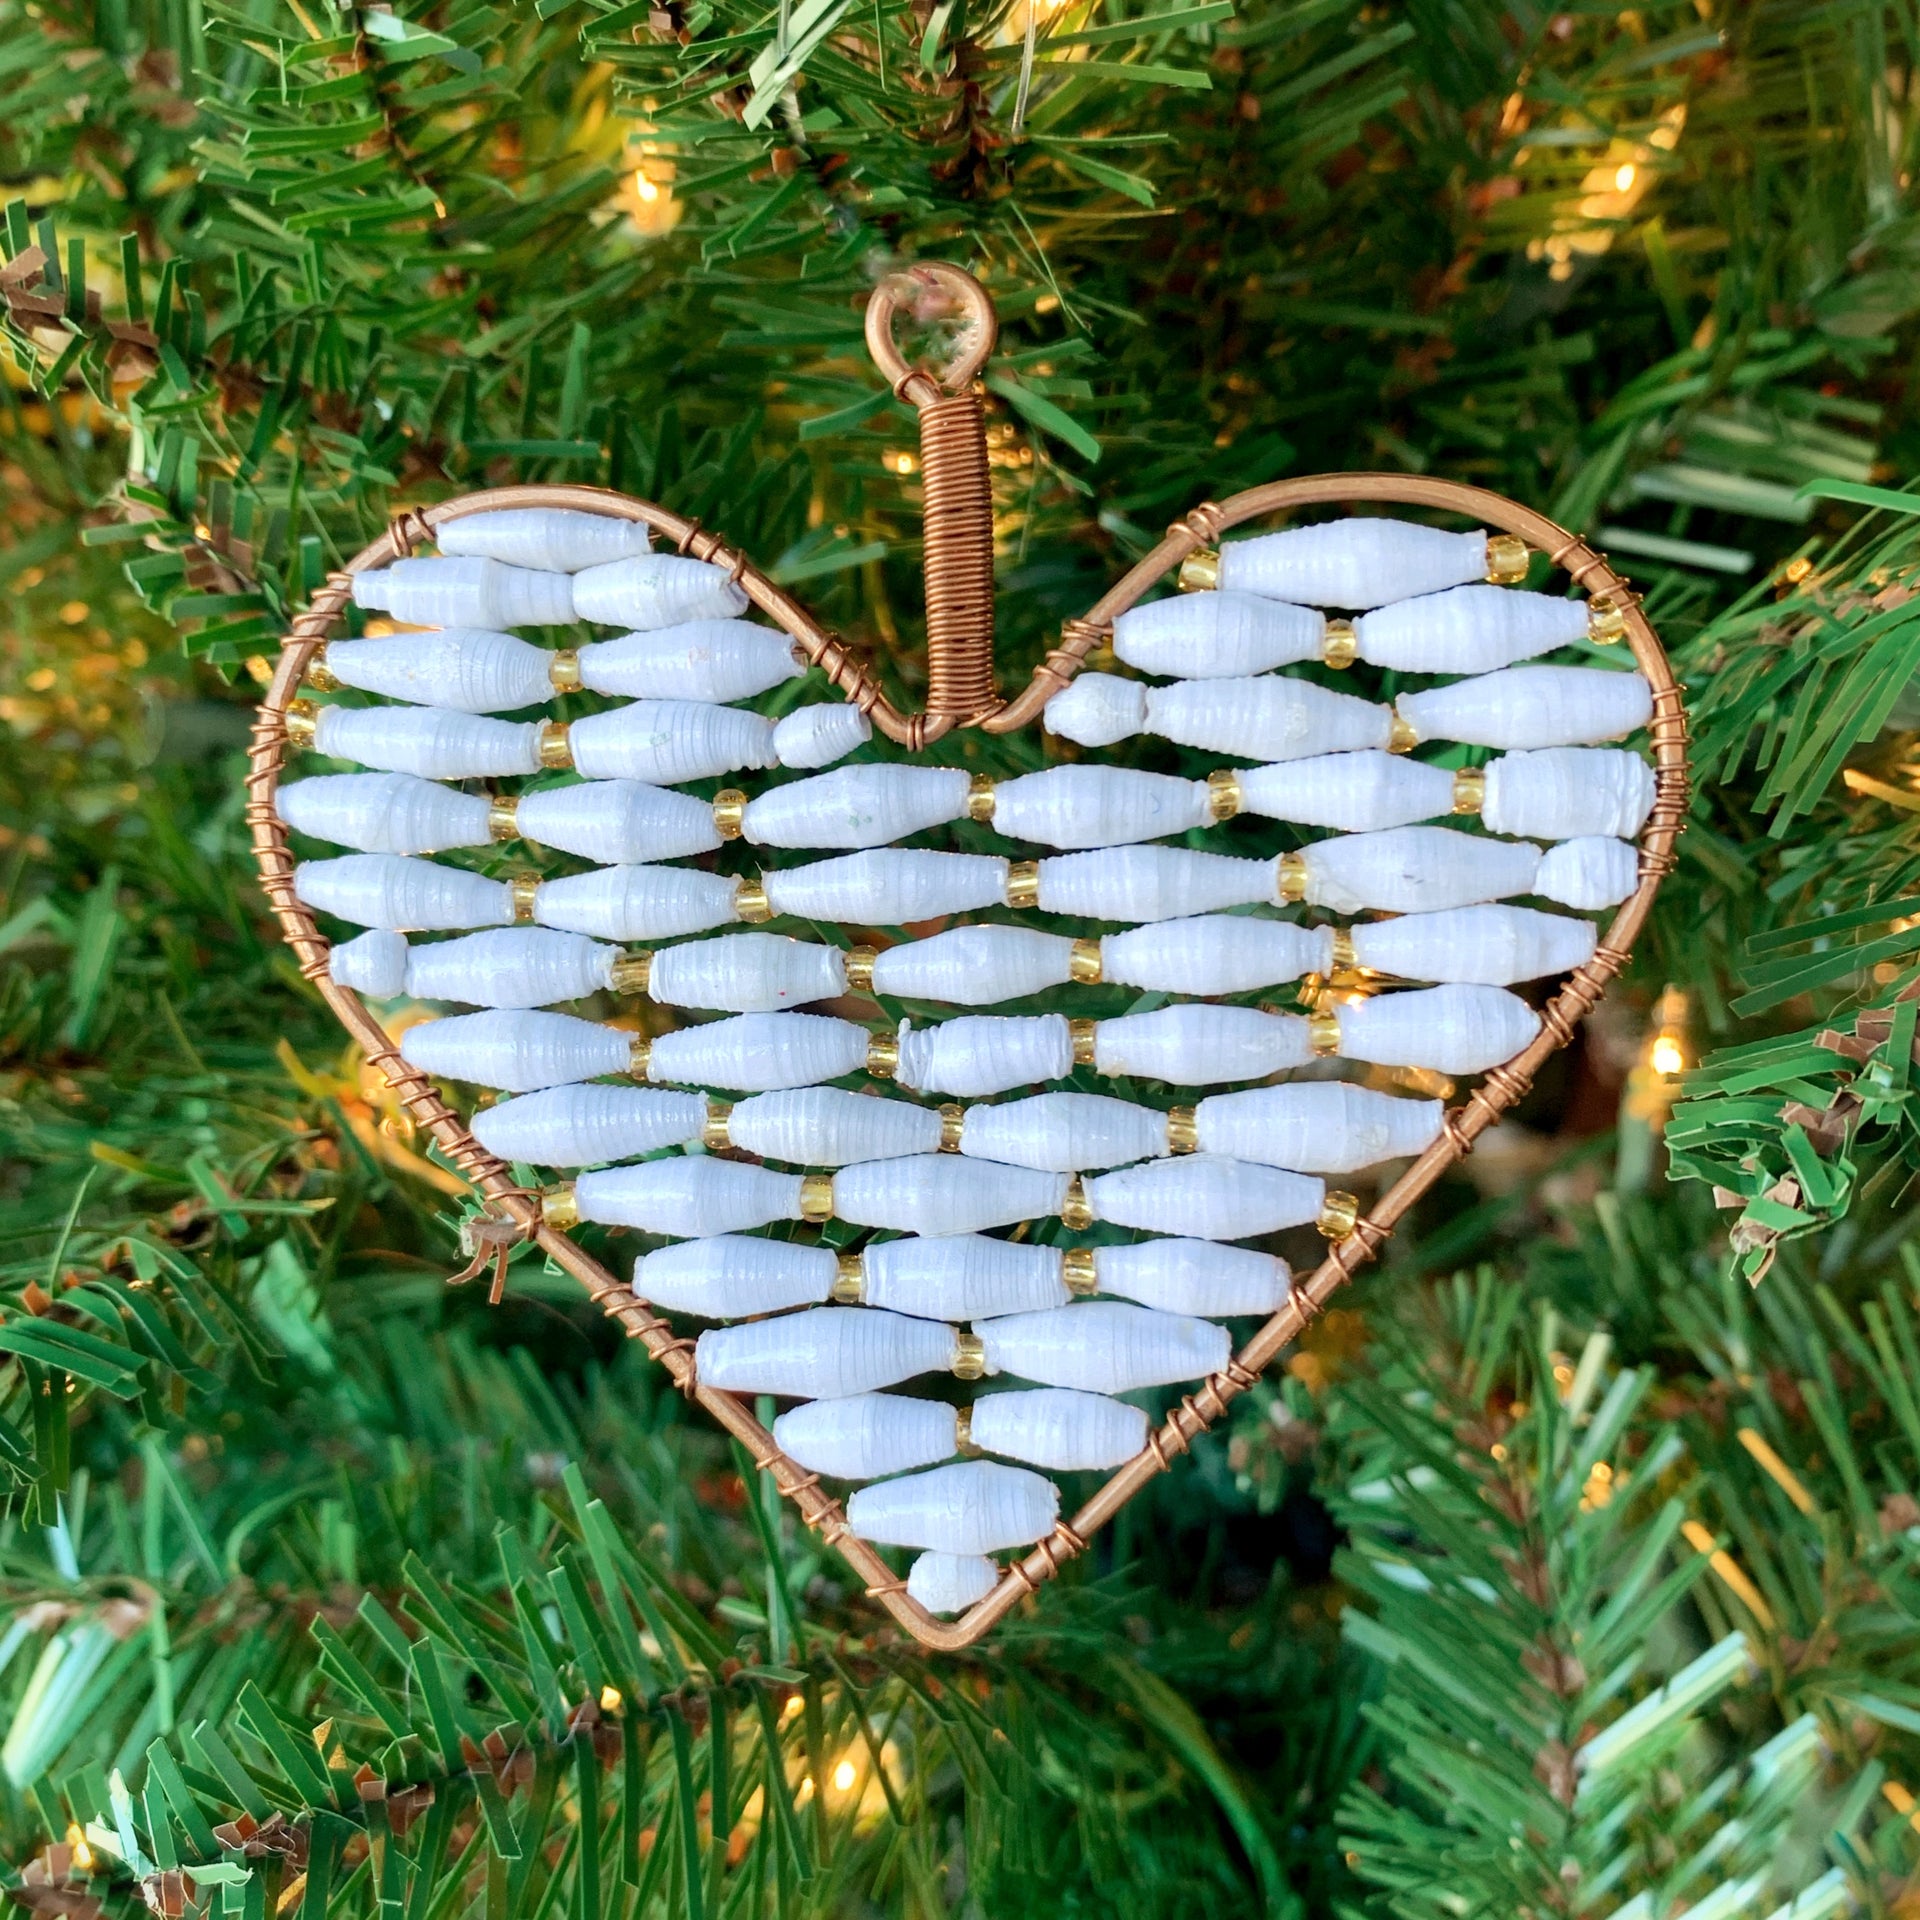 White Heart Paper Bead Ornament